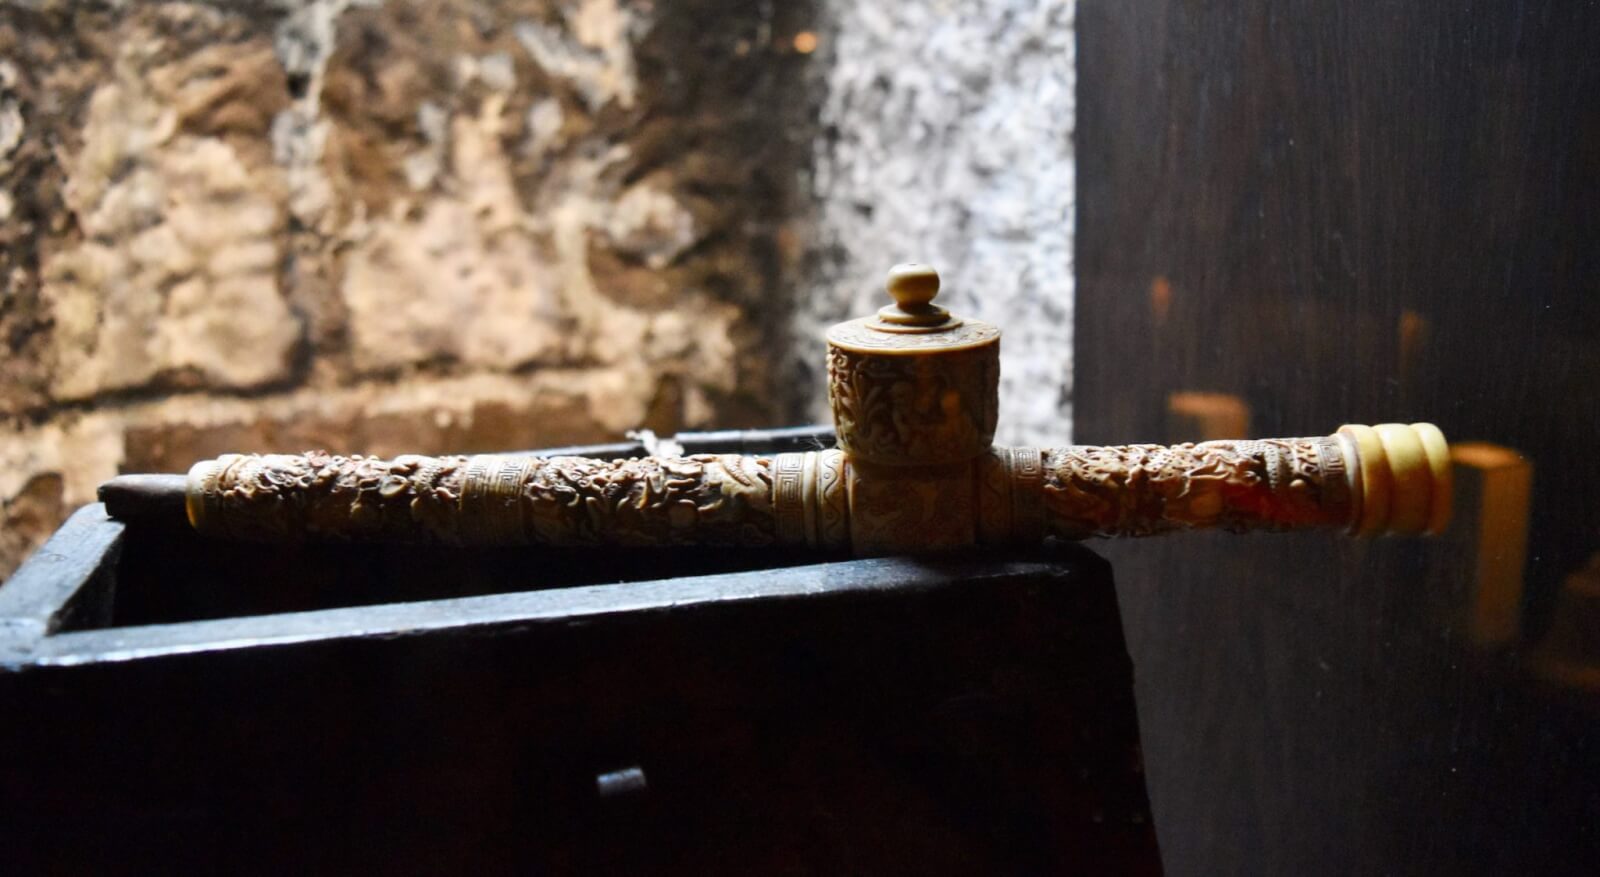 An ornate opium pipe